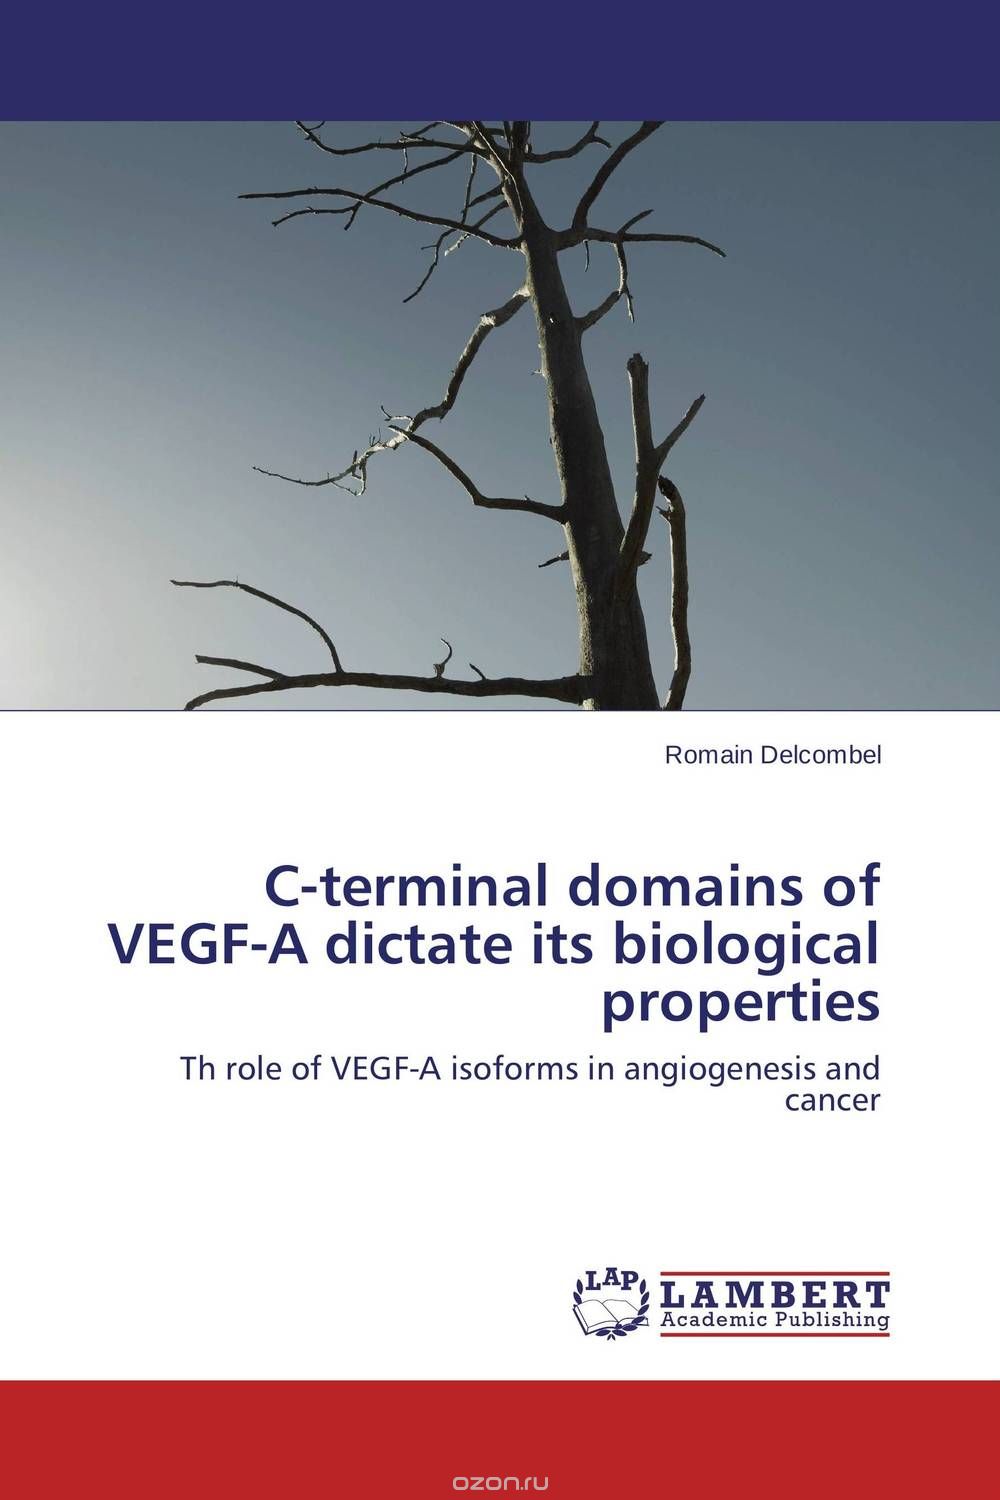 Скачать книгу "C-terminal domains of VEGF-A dictate its biological properties"